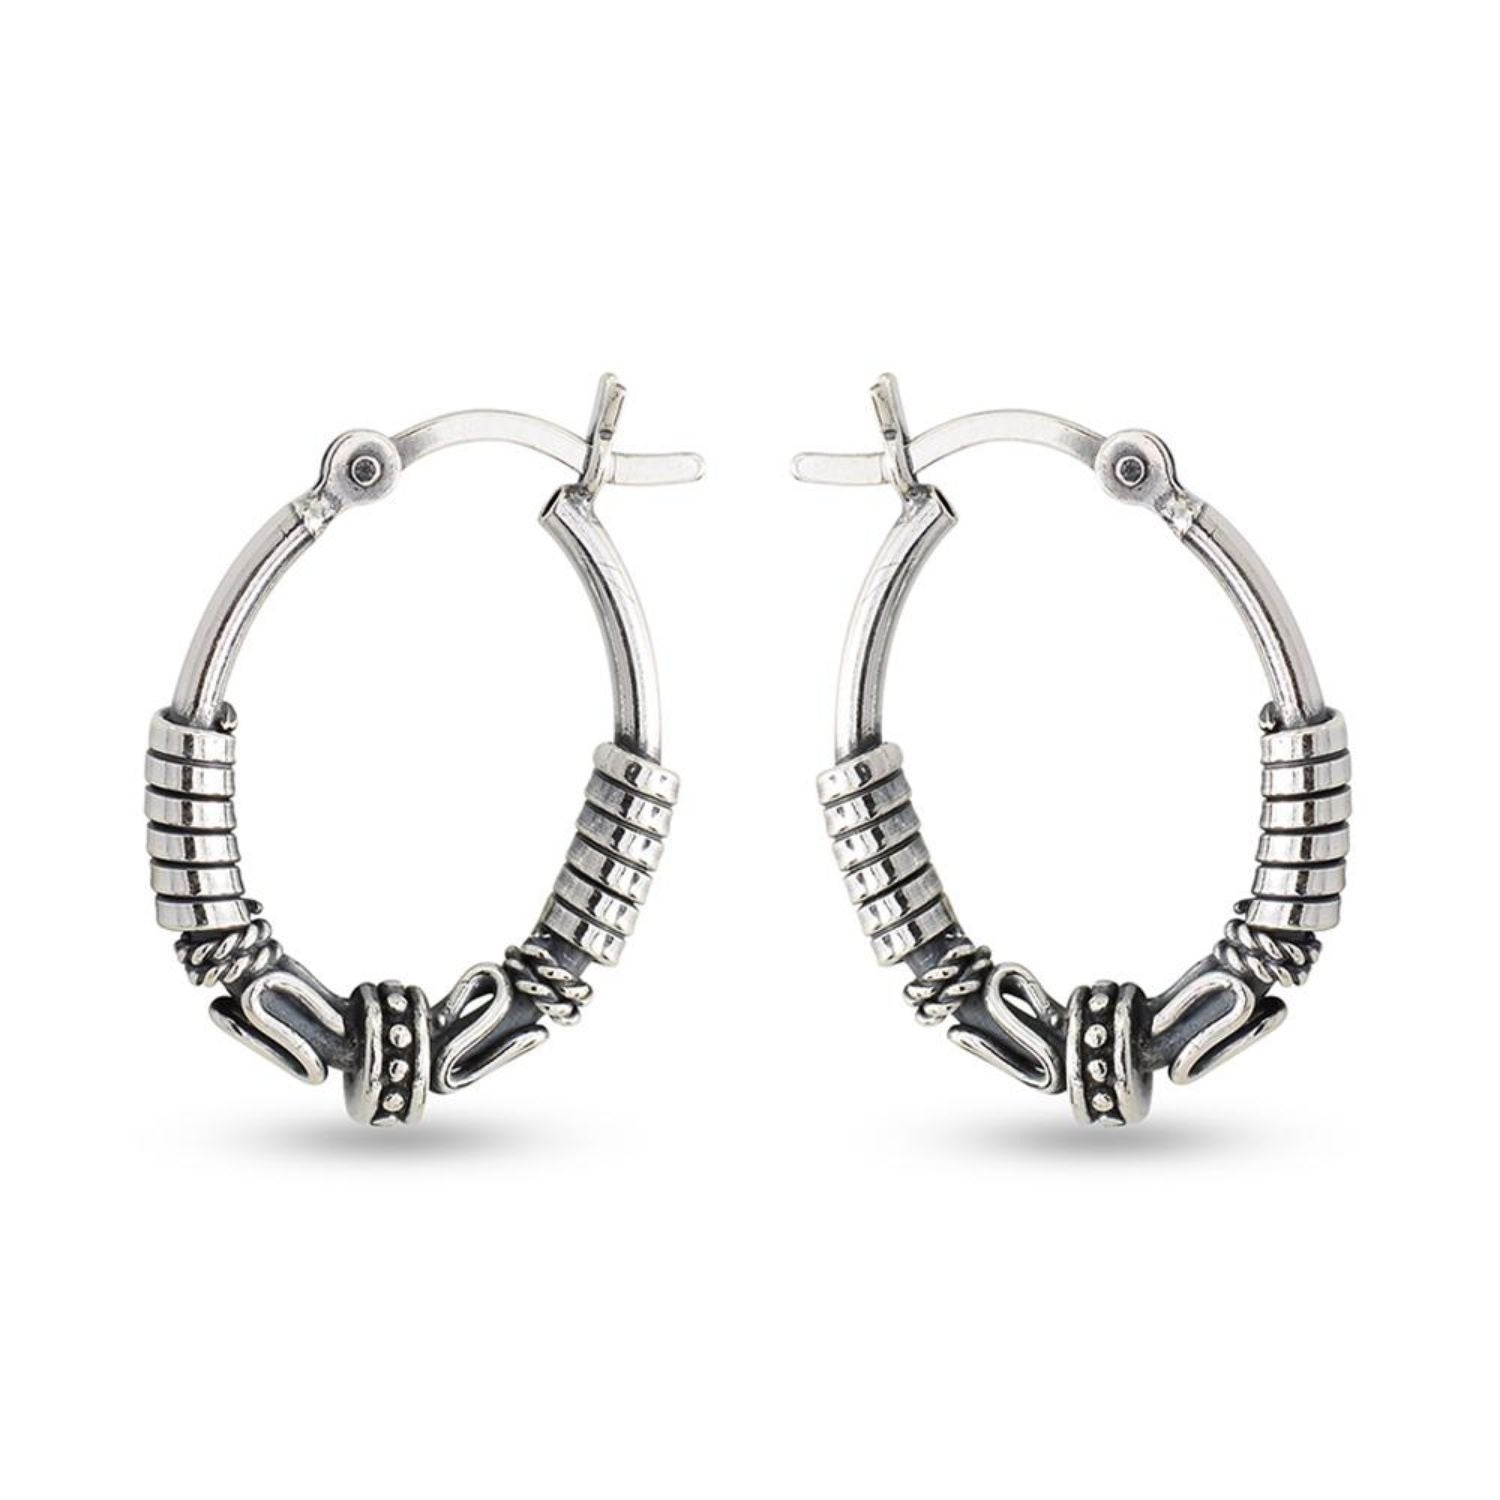 925 Sterling Silver Balinese Hoop Earrings for Teen Women